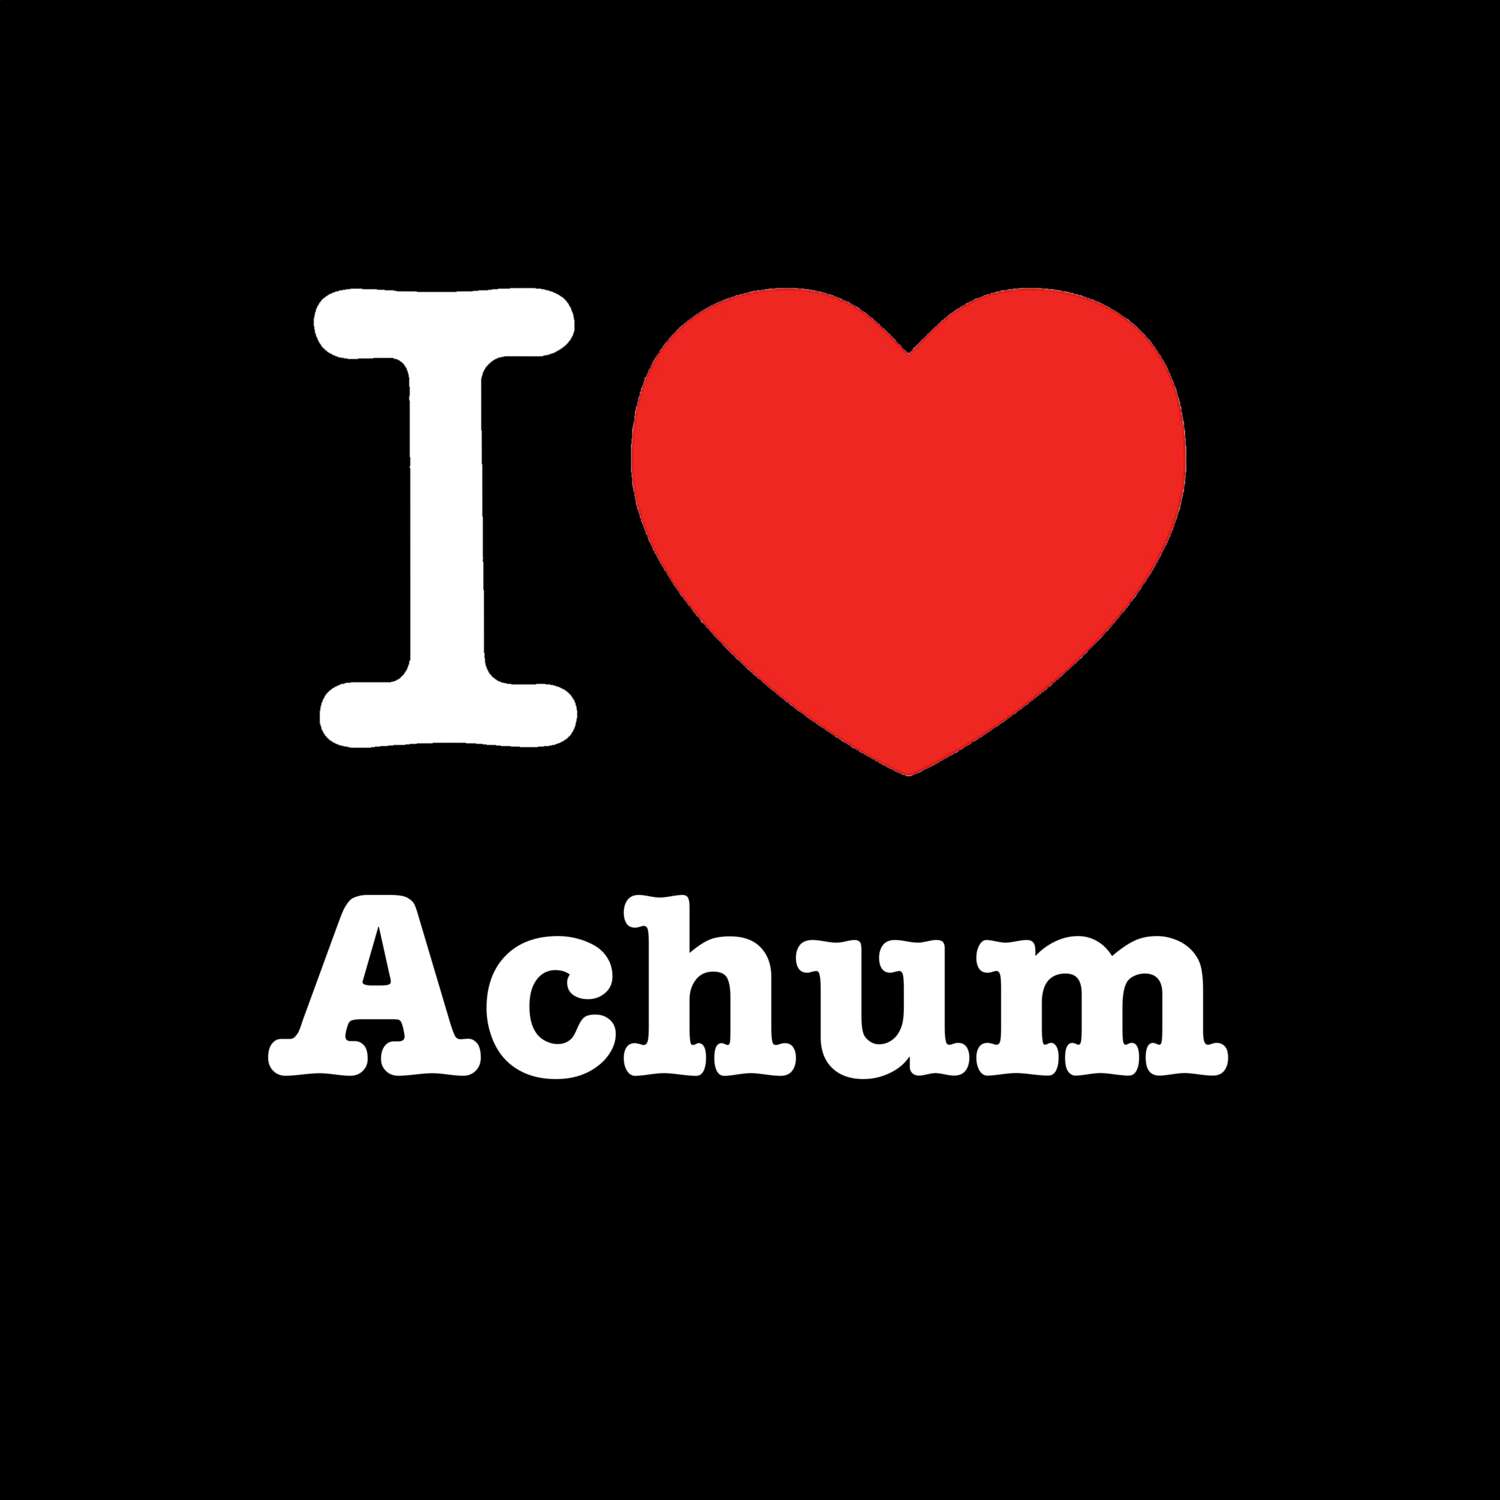 Achum T-Shirt »I love«